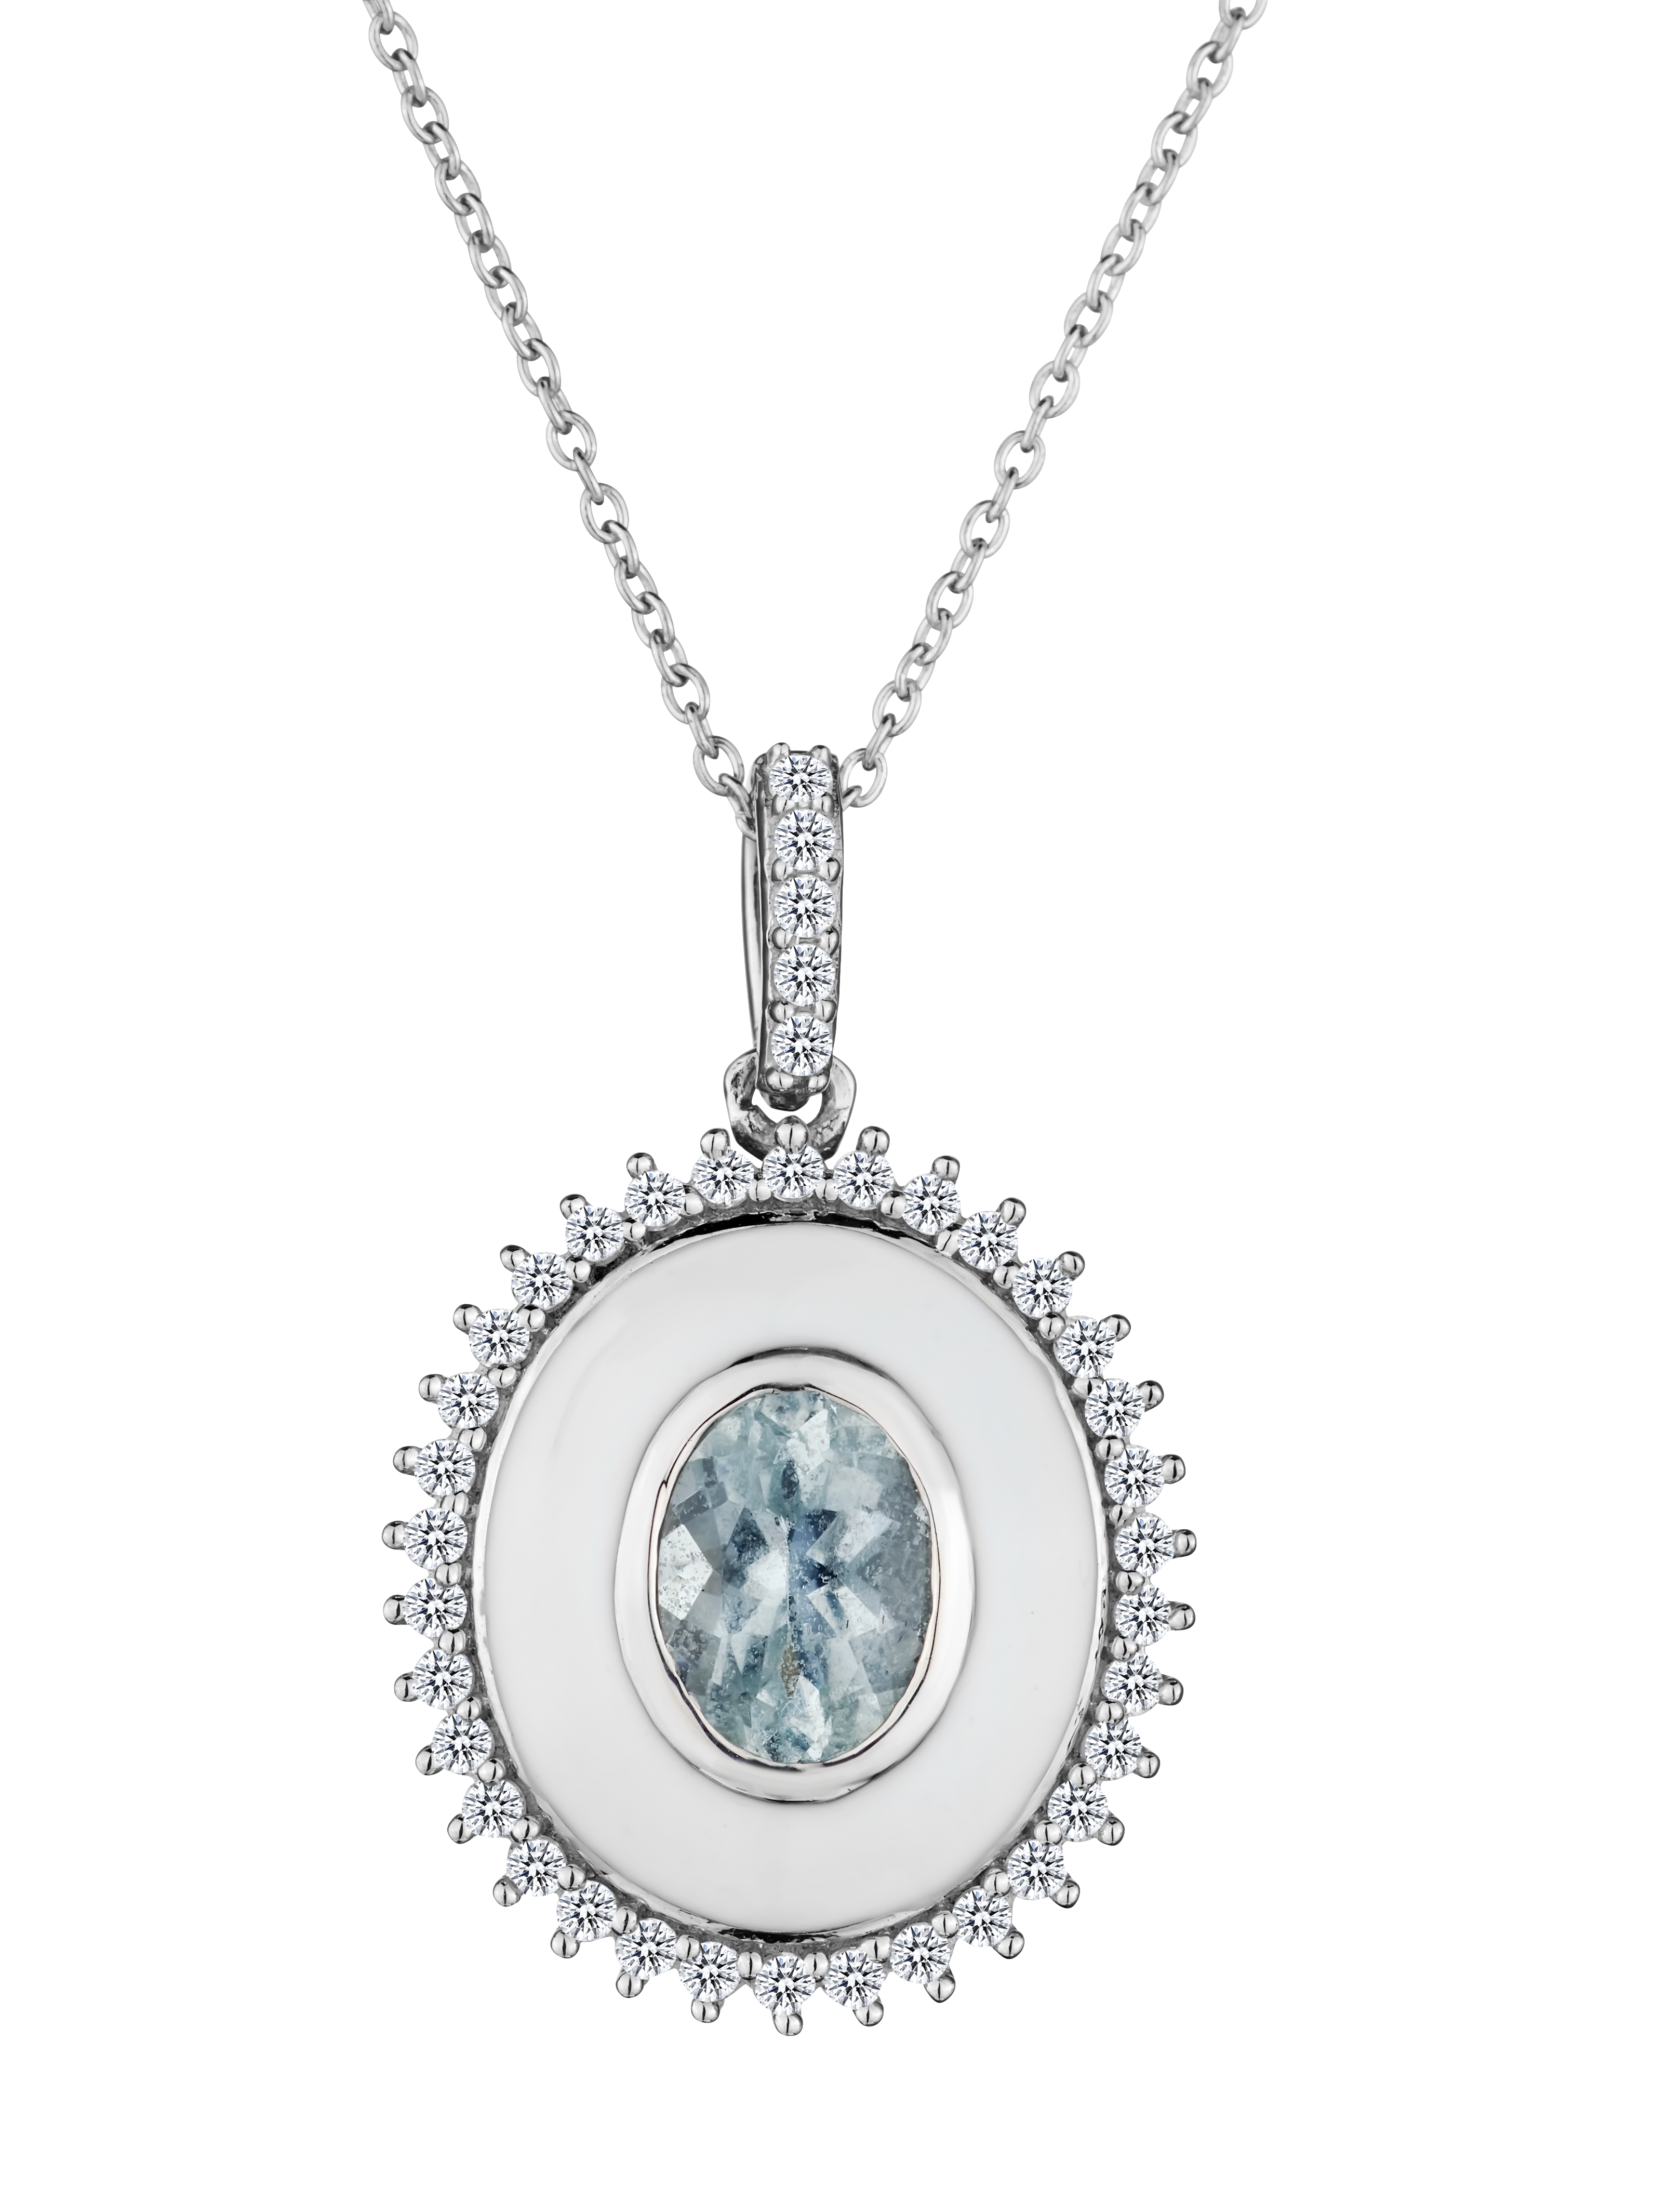 1.80 Carat Genuine Aquamarine + White Zircon Enamel Pendant, Sterling Silver. Necklaces and Pendants. Griffin Jewellery Designs. 